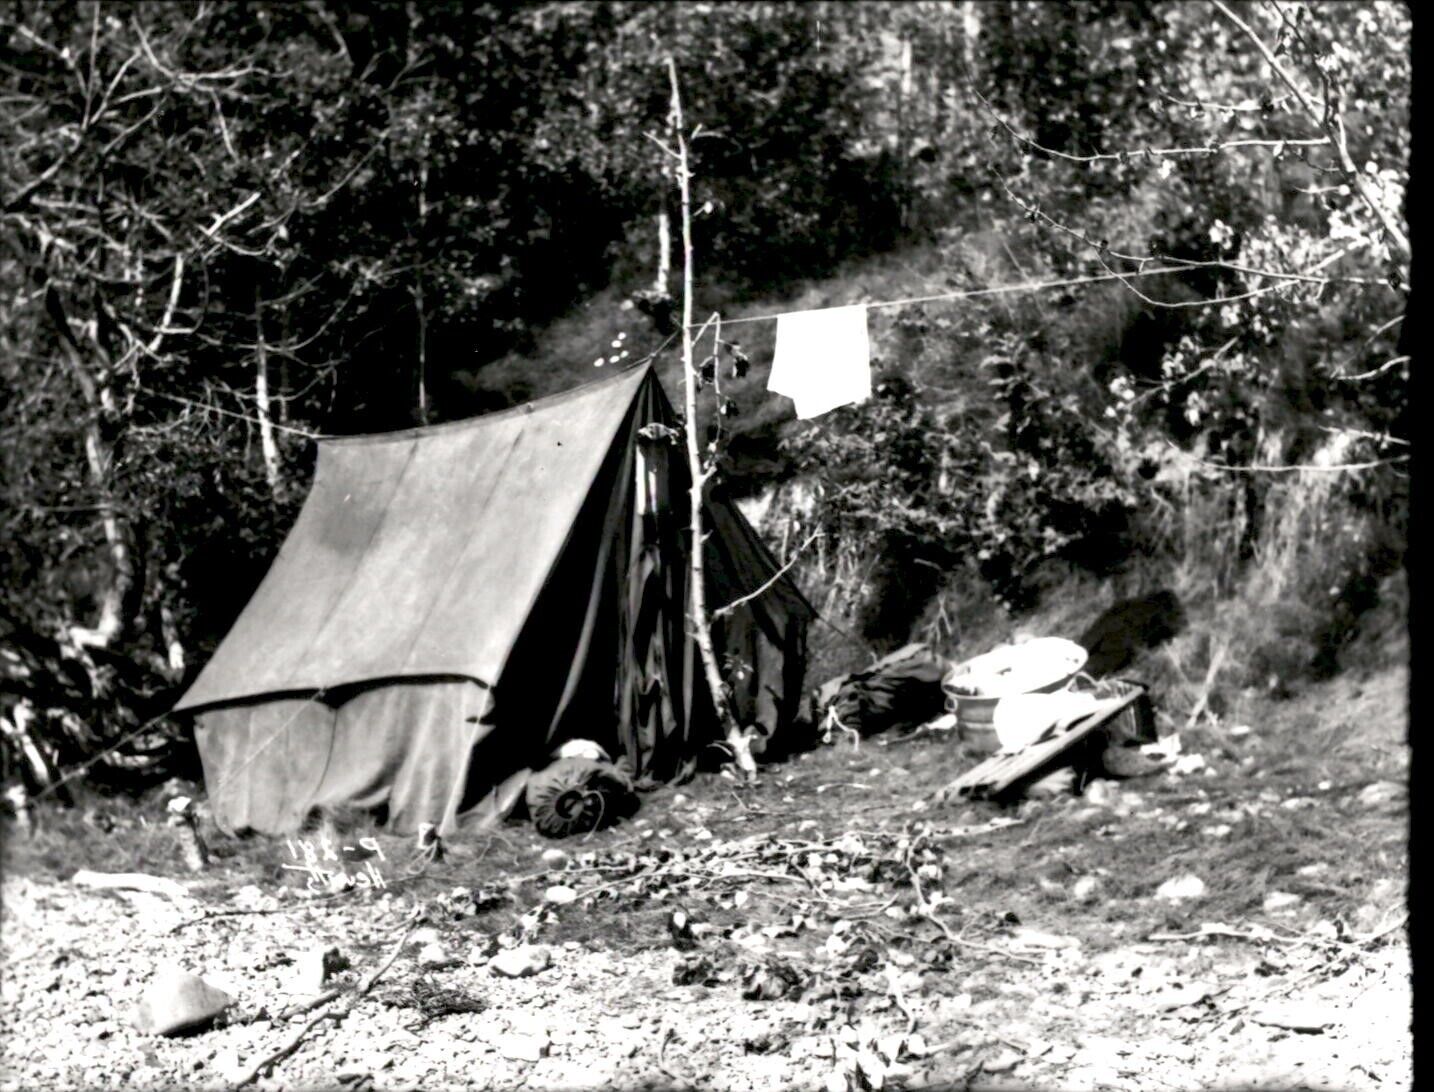 LG38 1935 2nd Gen Restrike Photo ALASKAN MOUNTAIN MAN CAMP GOLD PROSPECTING TENT